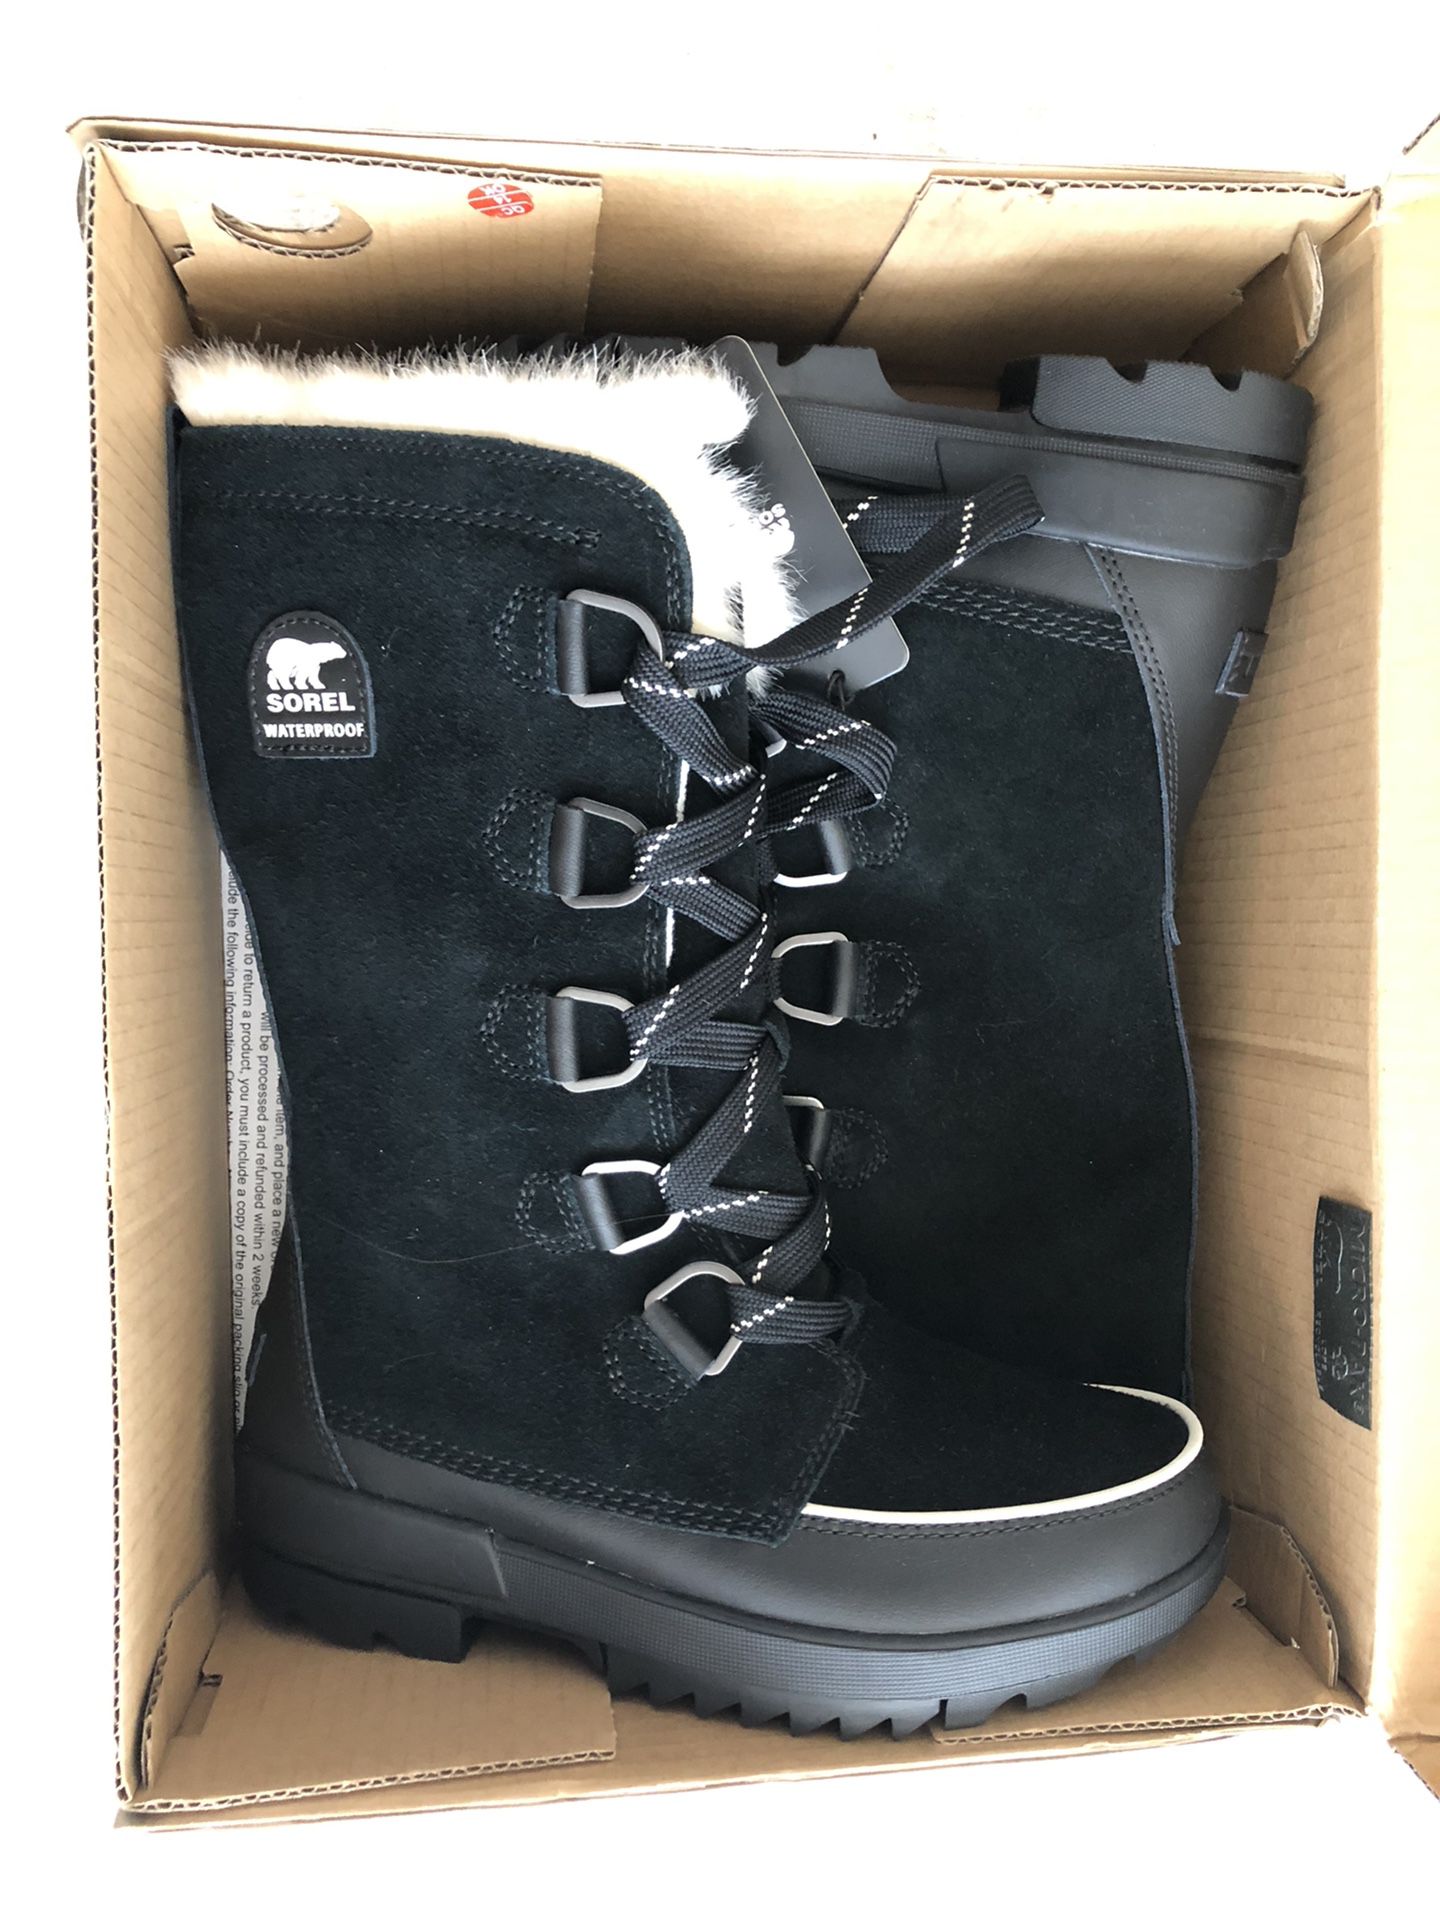 Sorel Winter Boots, Womens Size 8